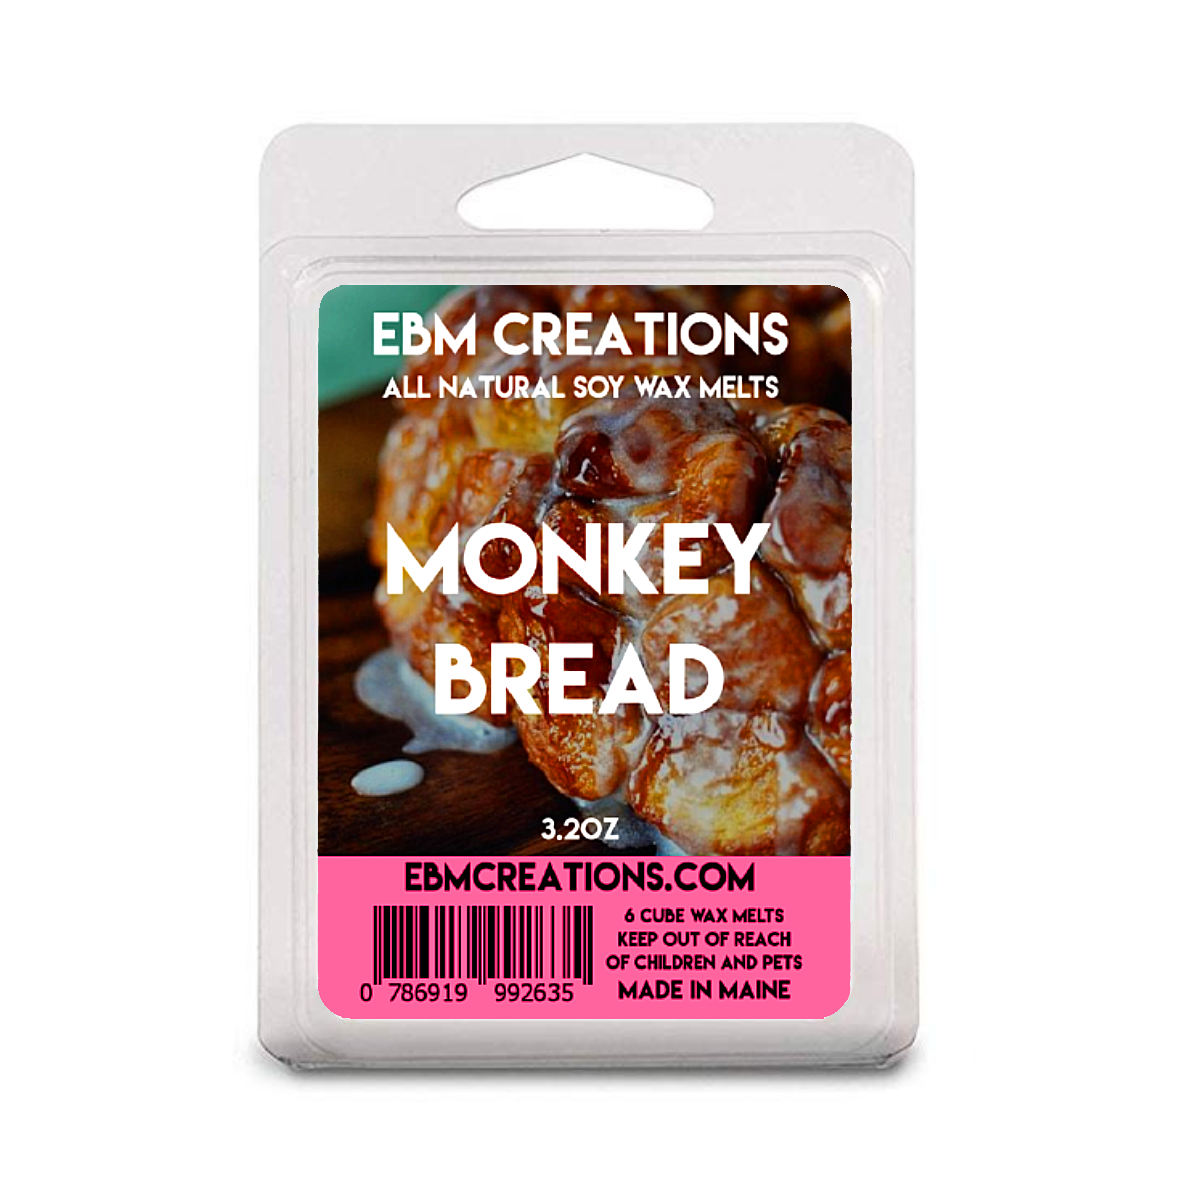 Monkey Bread - 3.2 oz Clamshell